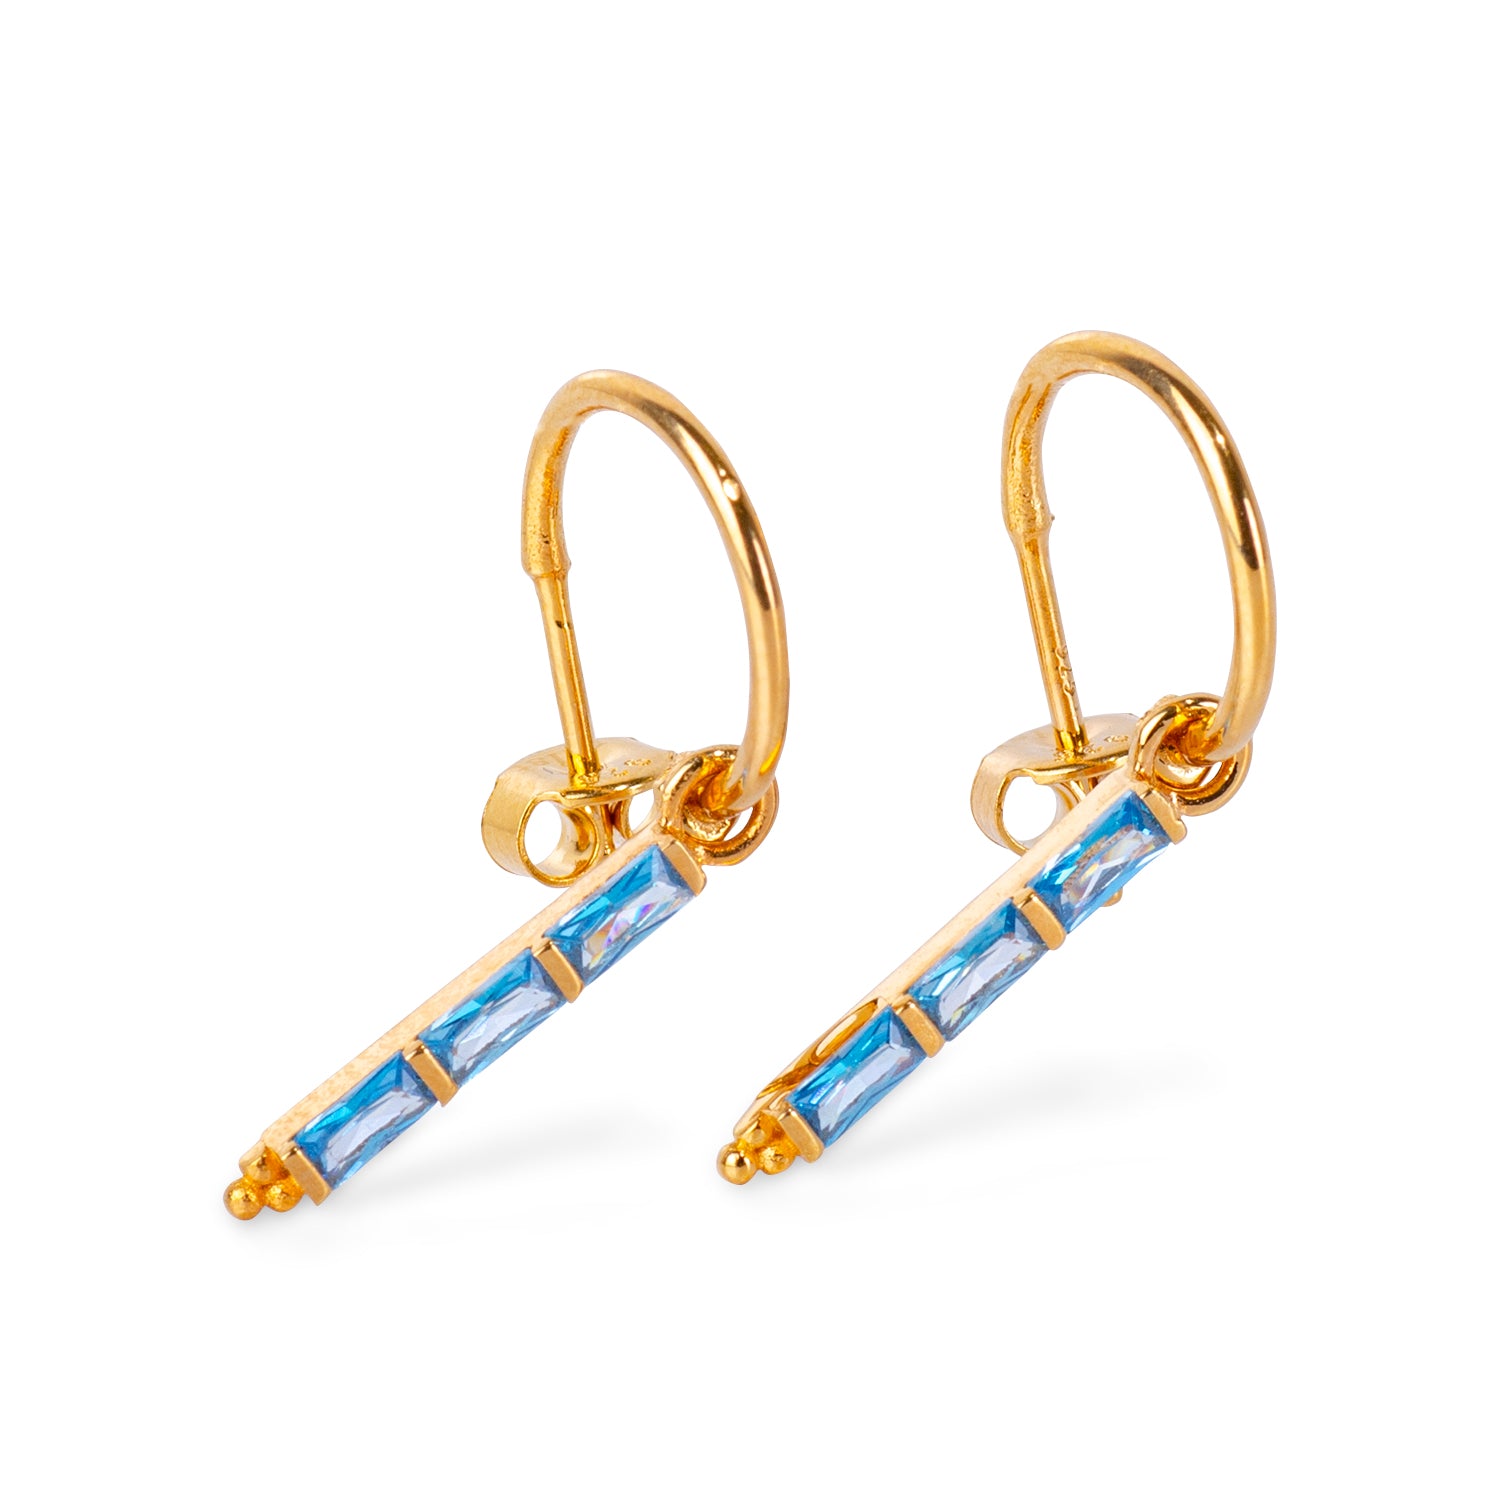 Theodora Topaz 24K Gold Earrings - Gold Vermeil Earrings - Pretland | Spiritual Crystals & Jewelry